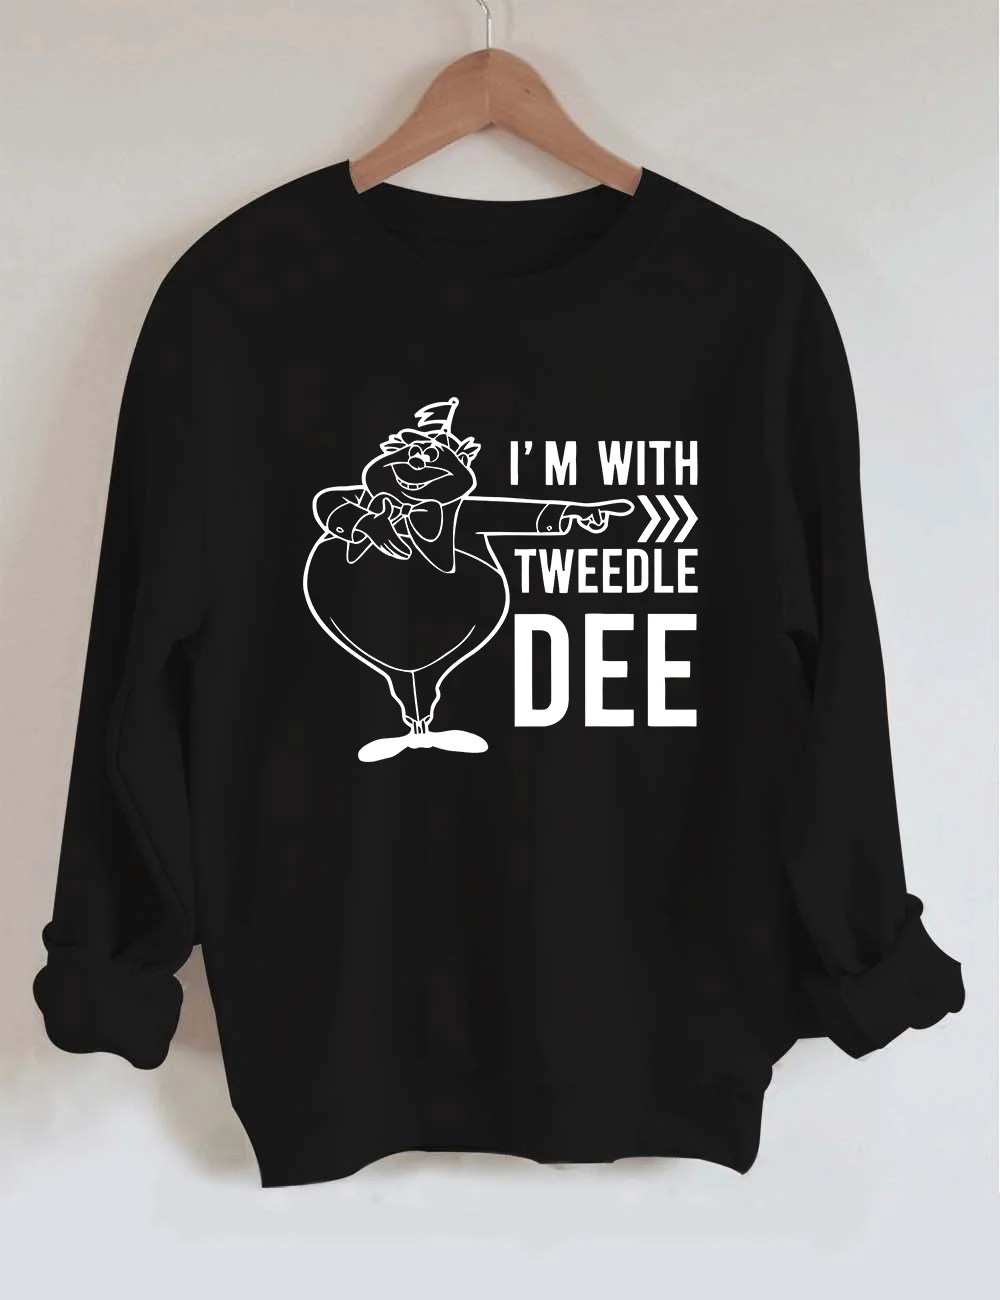 I'M With Tweedle Dee/Tweedle Dum Sweatshirt